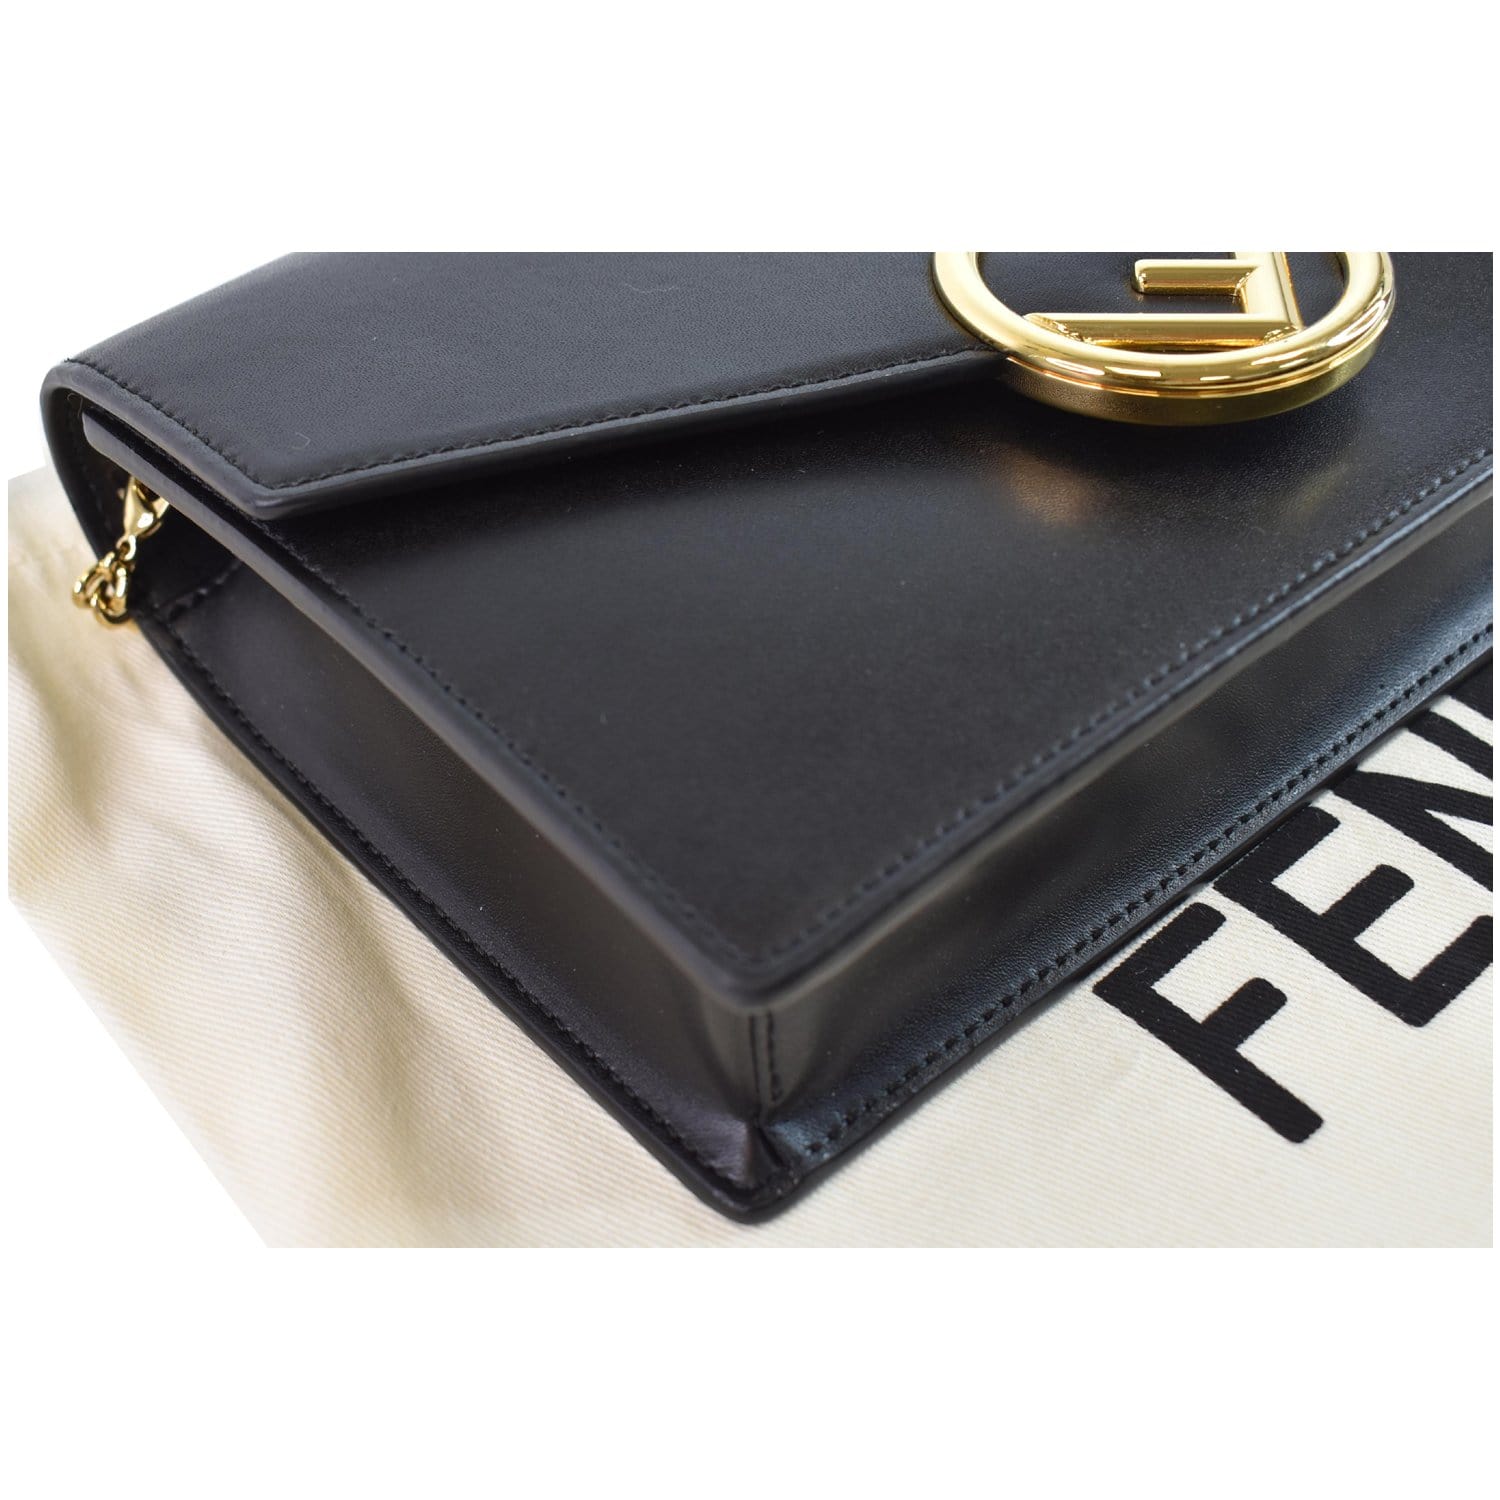 Fendi Baguette Leather Wallet on Chain